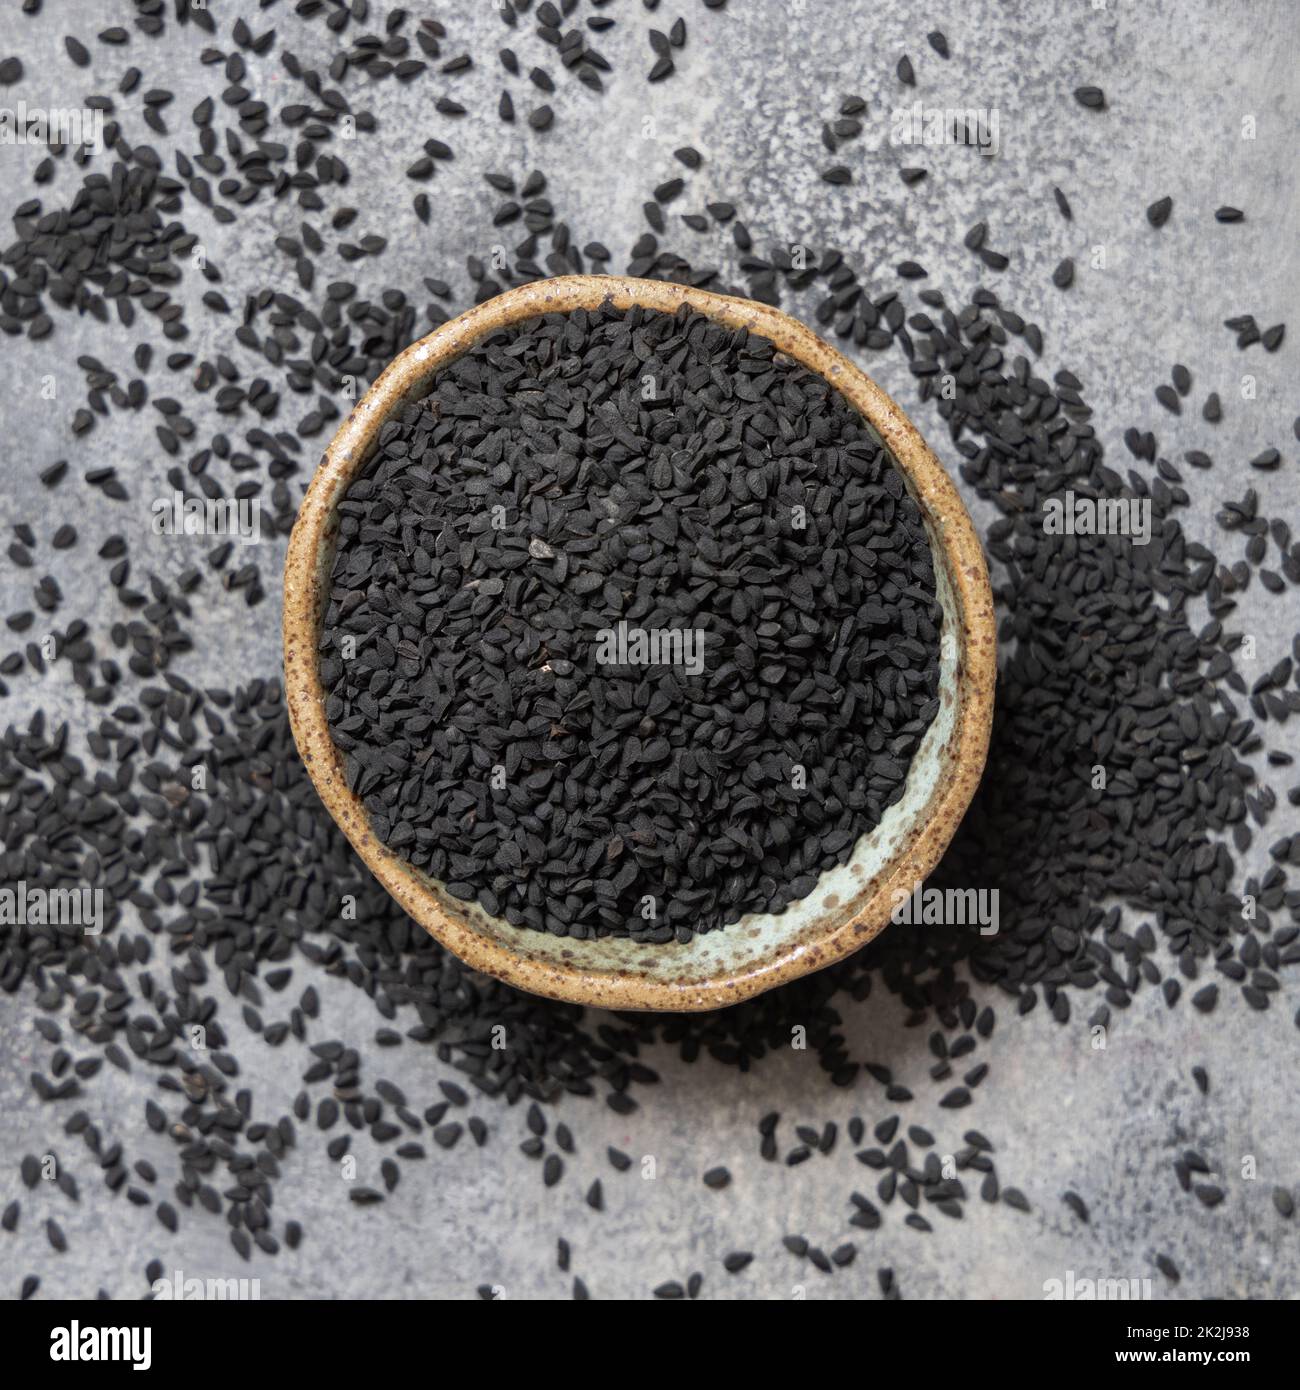 Indian spice Black cumin (nigella sativa or kalonji) seeds in bowl  top view Stock Photo